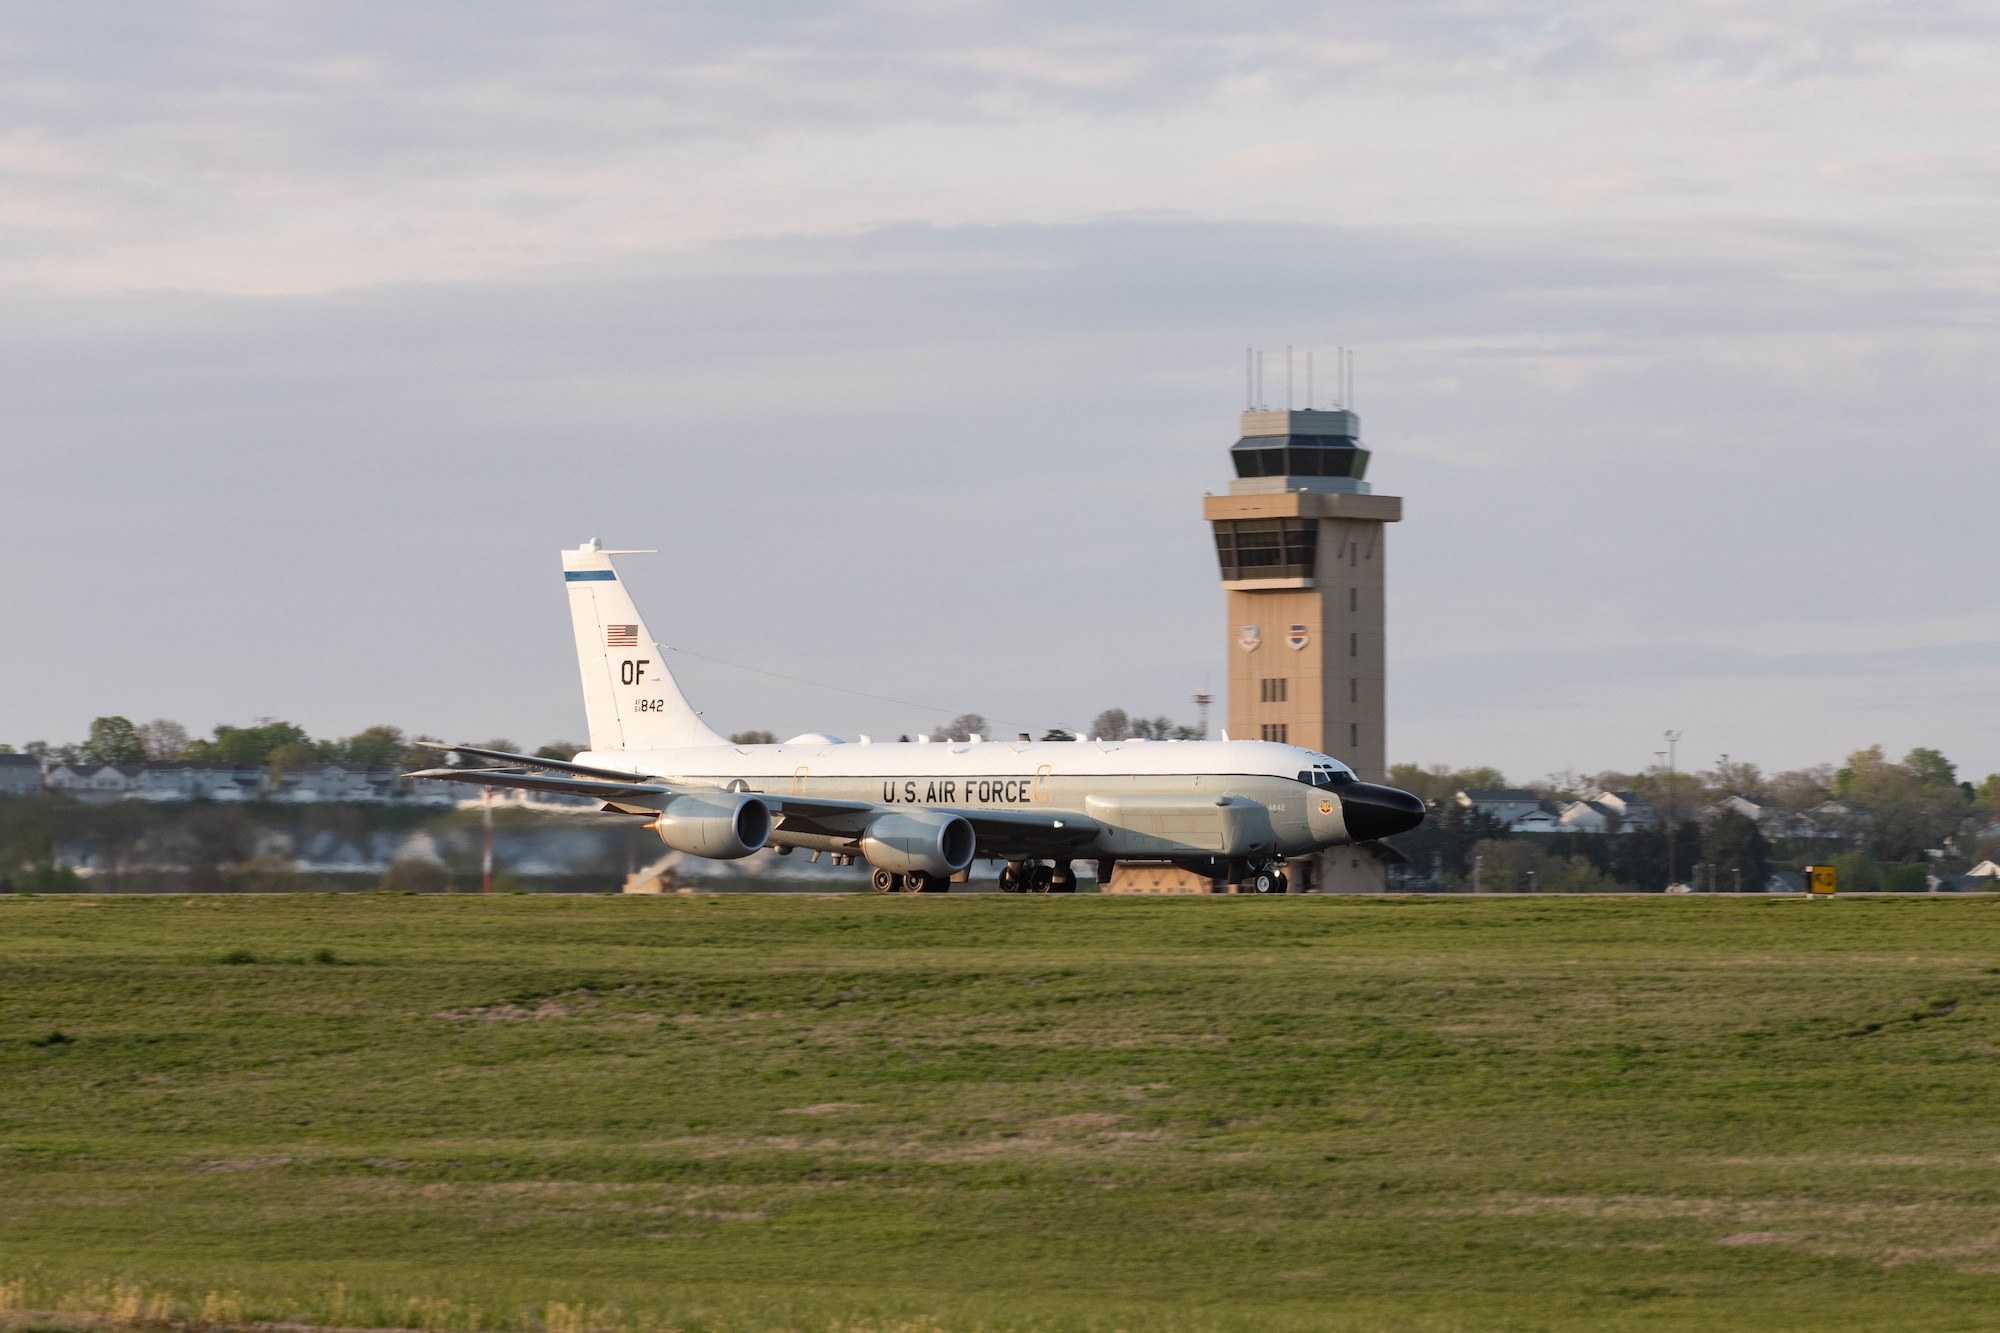 RC-135 aircraft takeoff